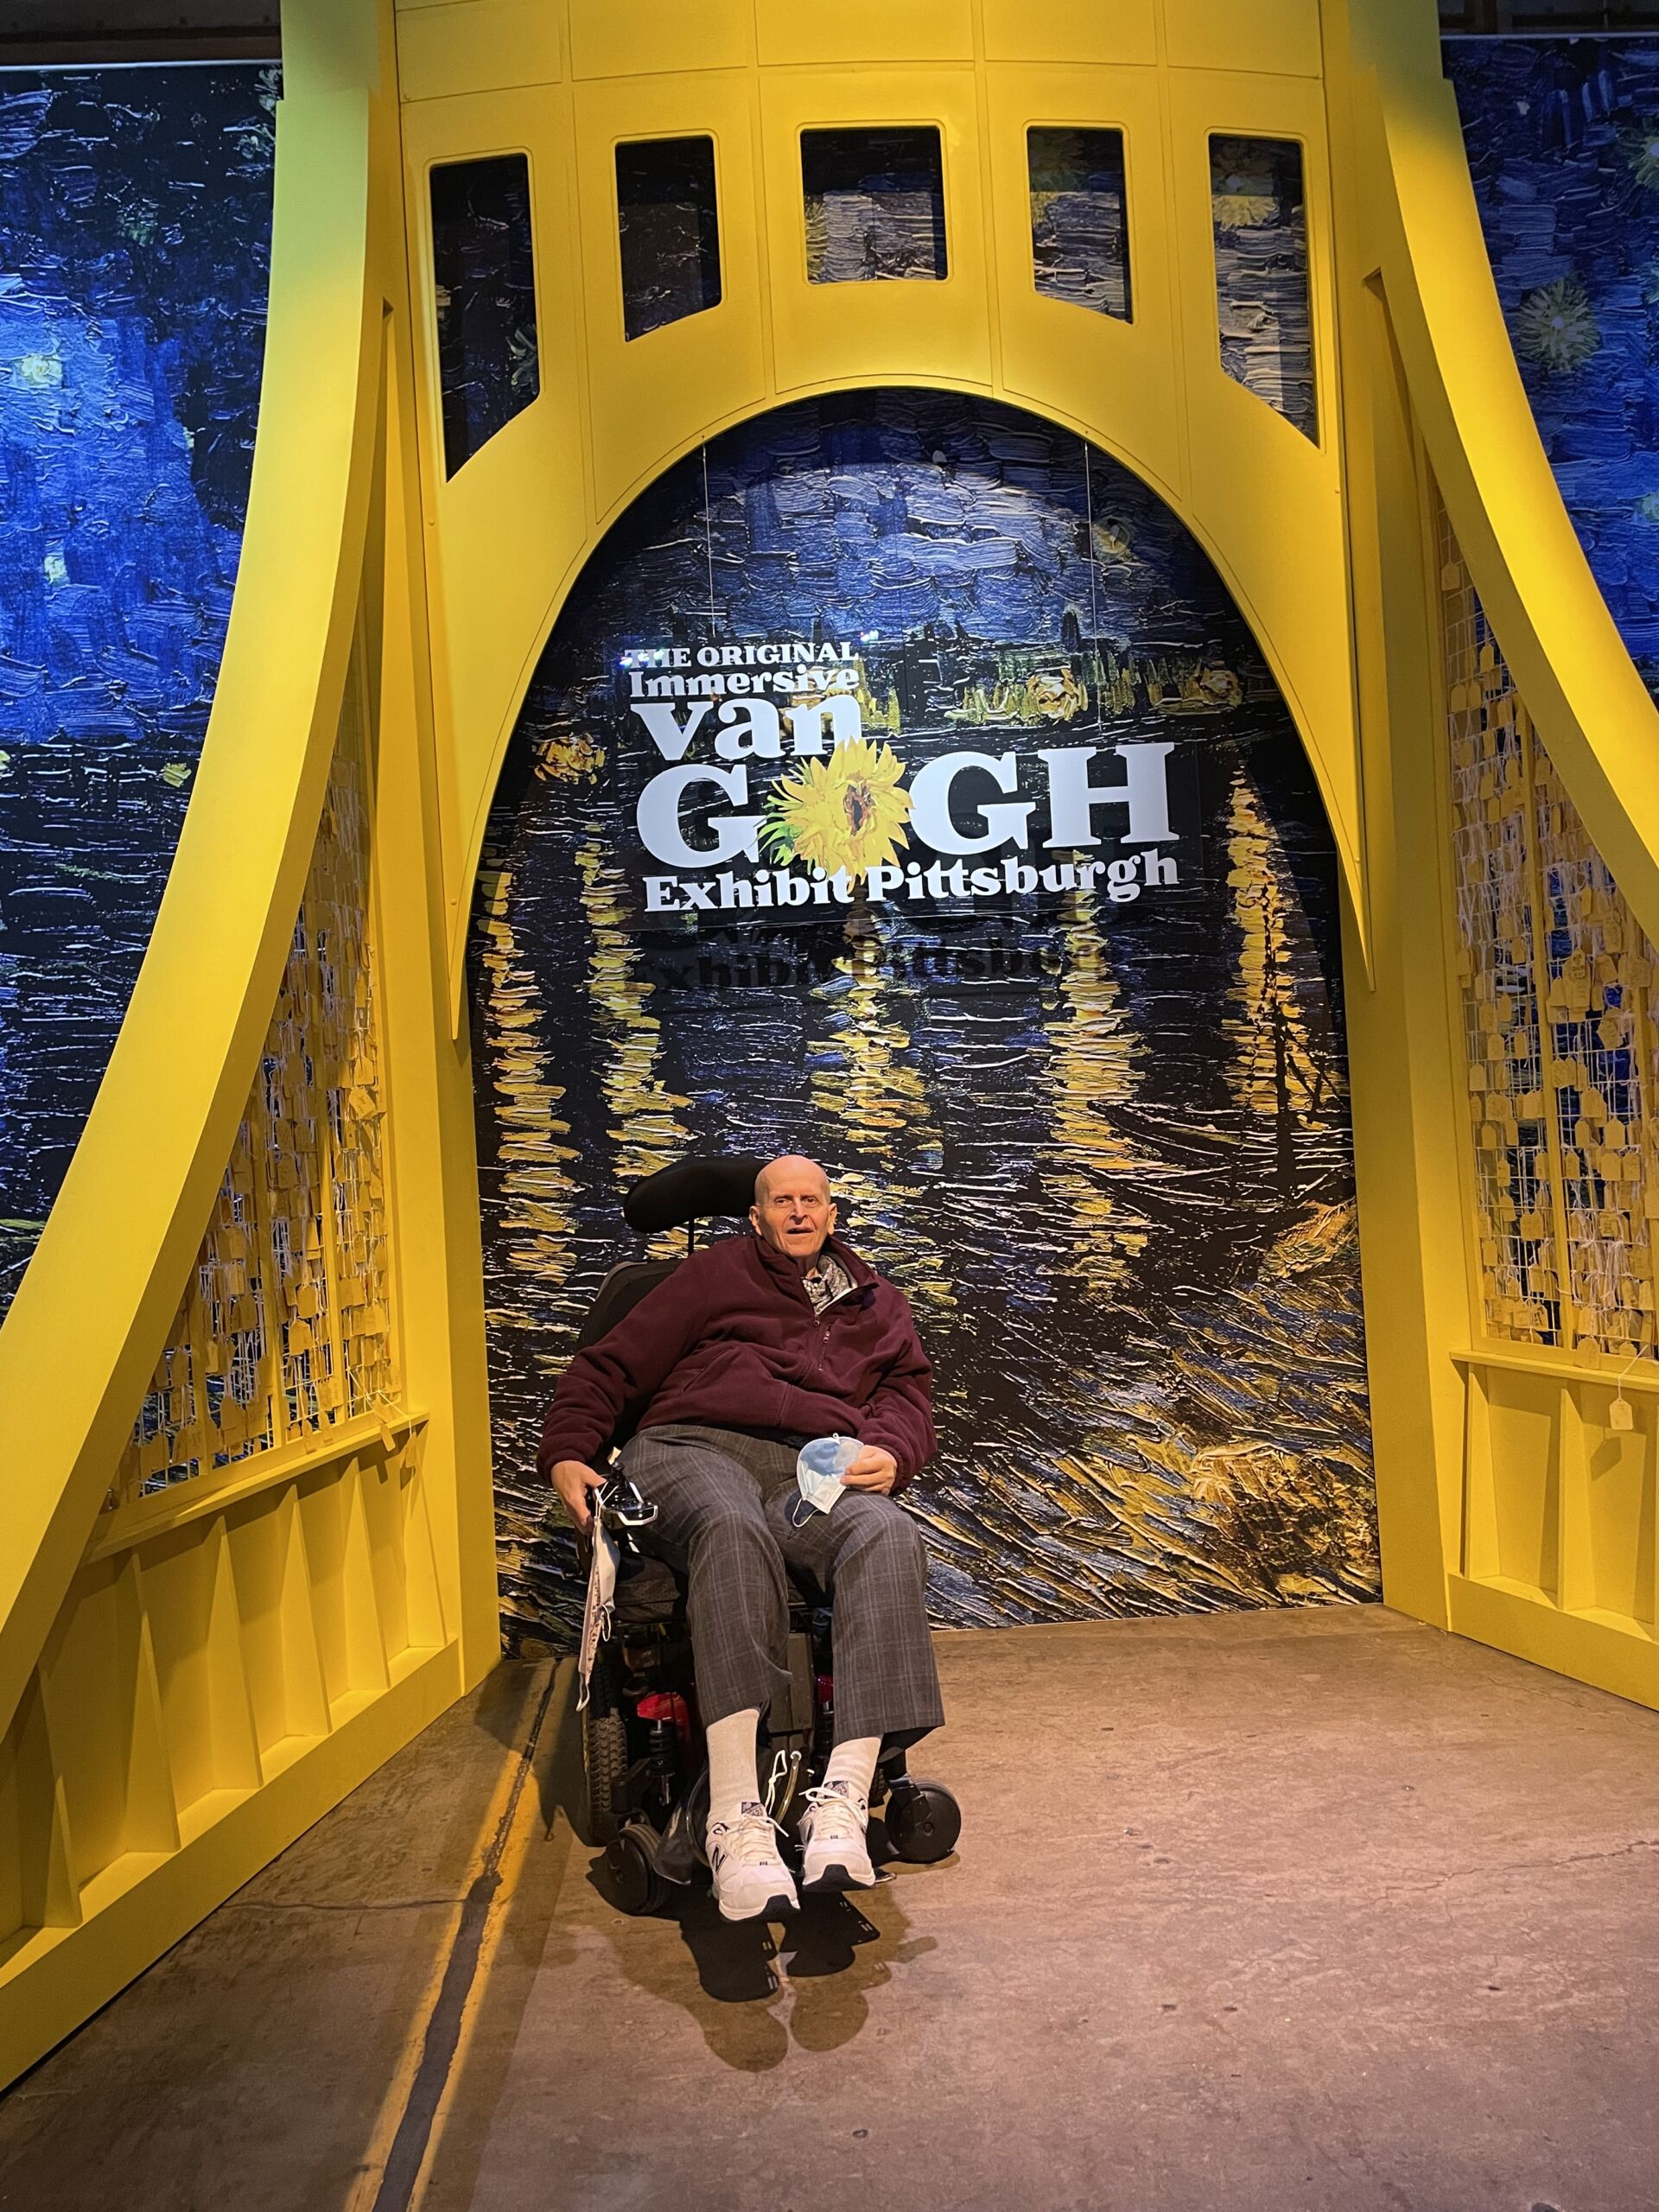 Redstone resident Joe Rusinko attends The Original Immersive Van Gogh Exhibit Pittsburgh